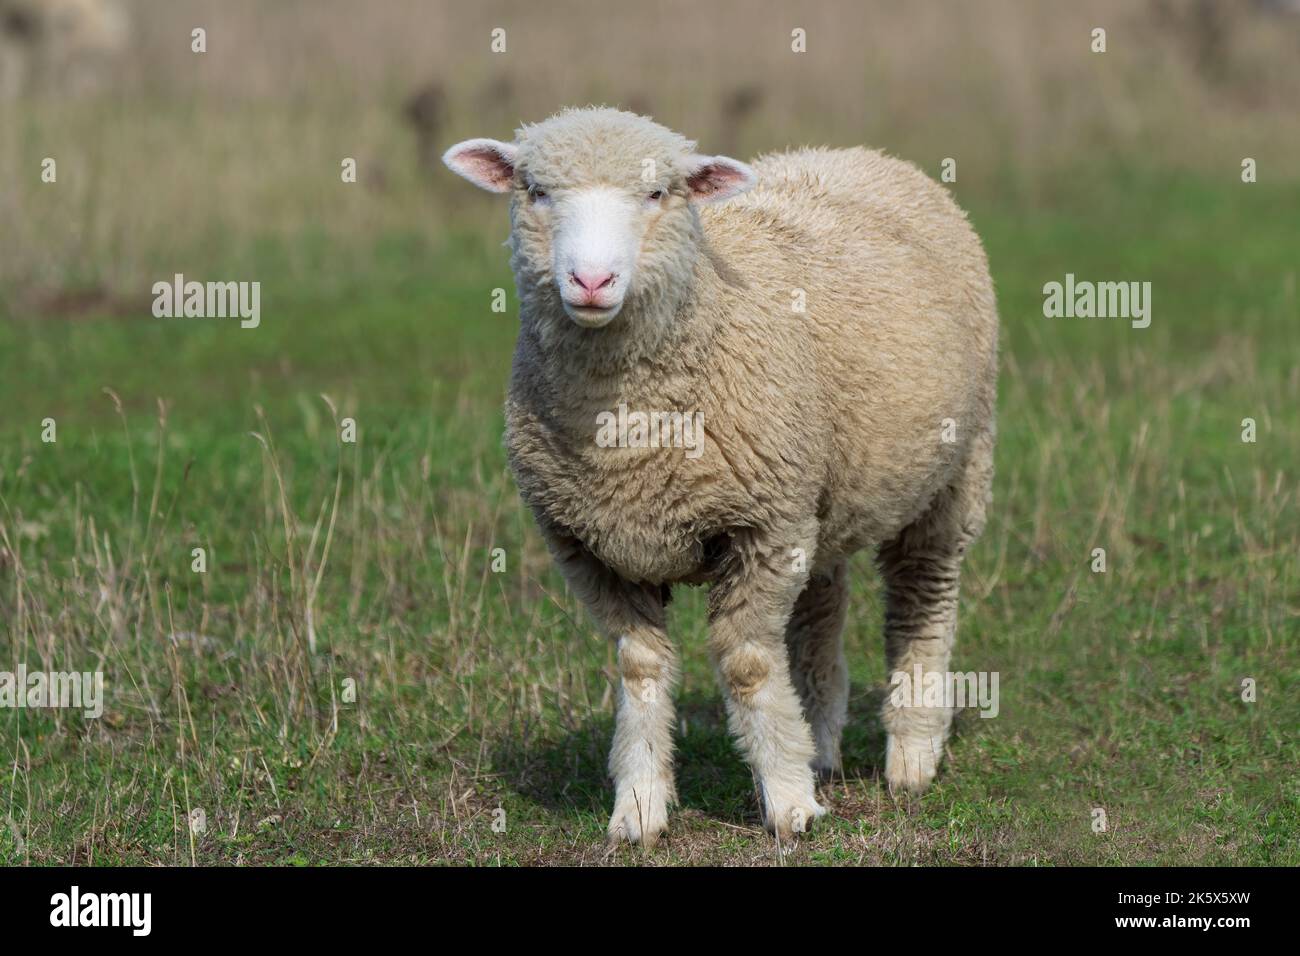 Sheep-Ovis aries. Stock Photo